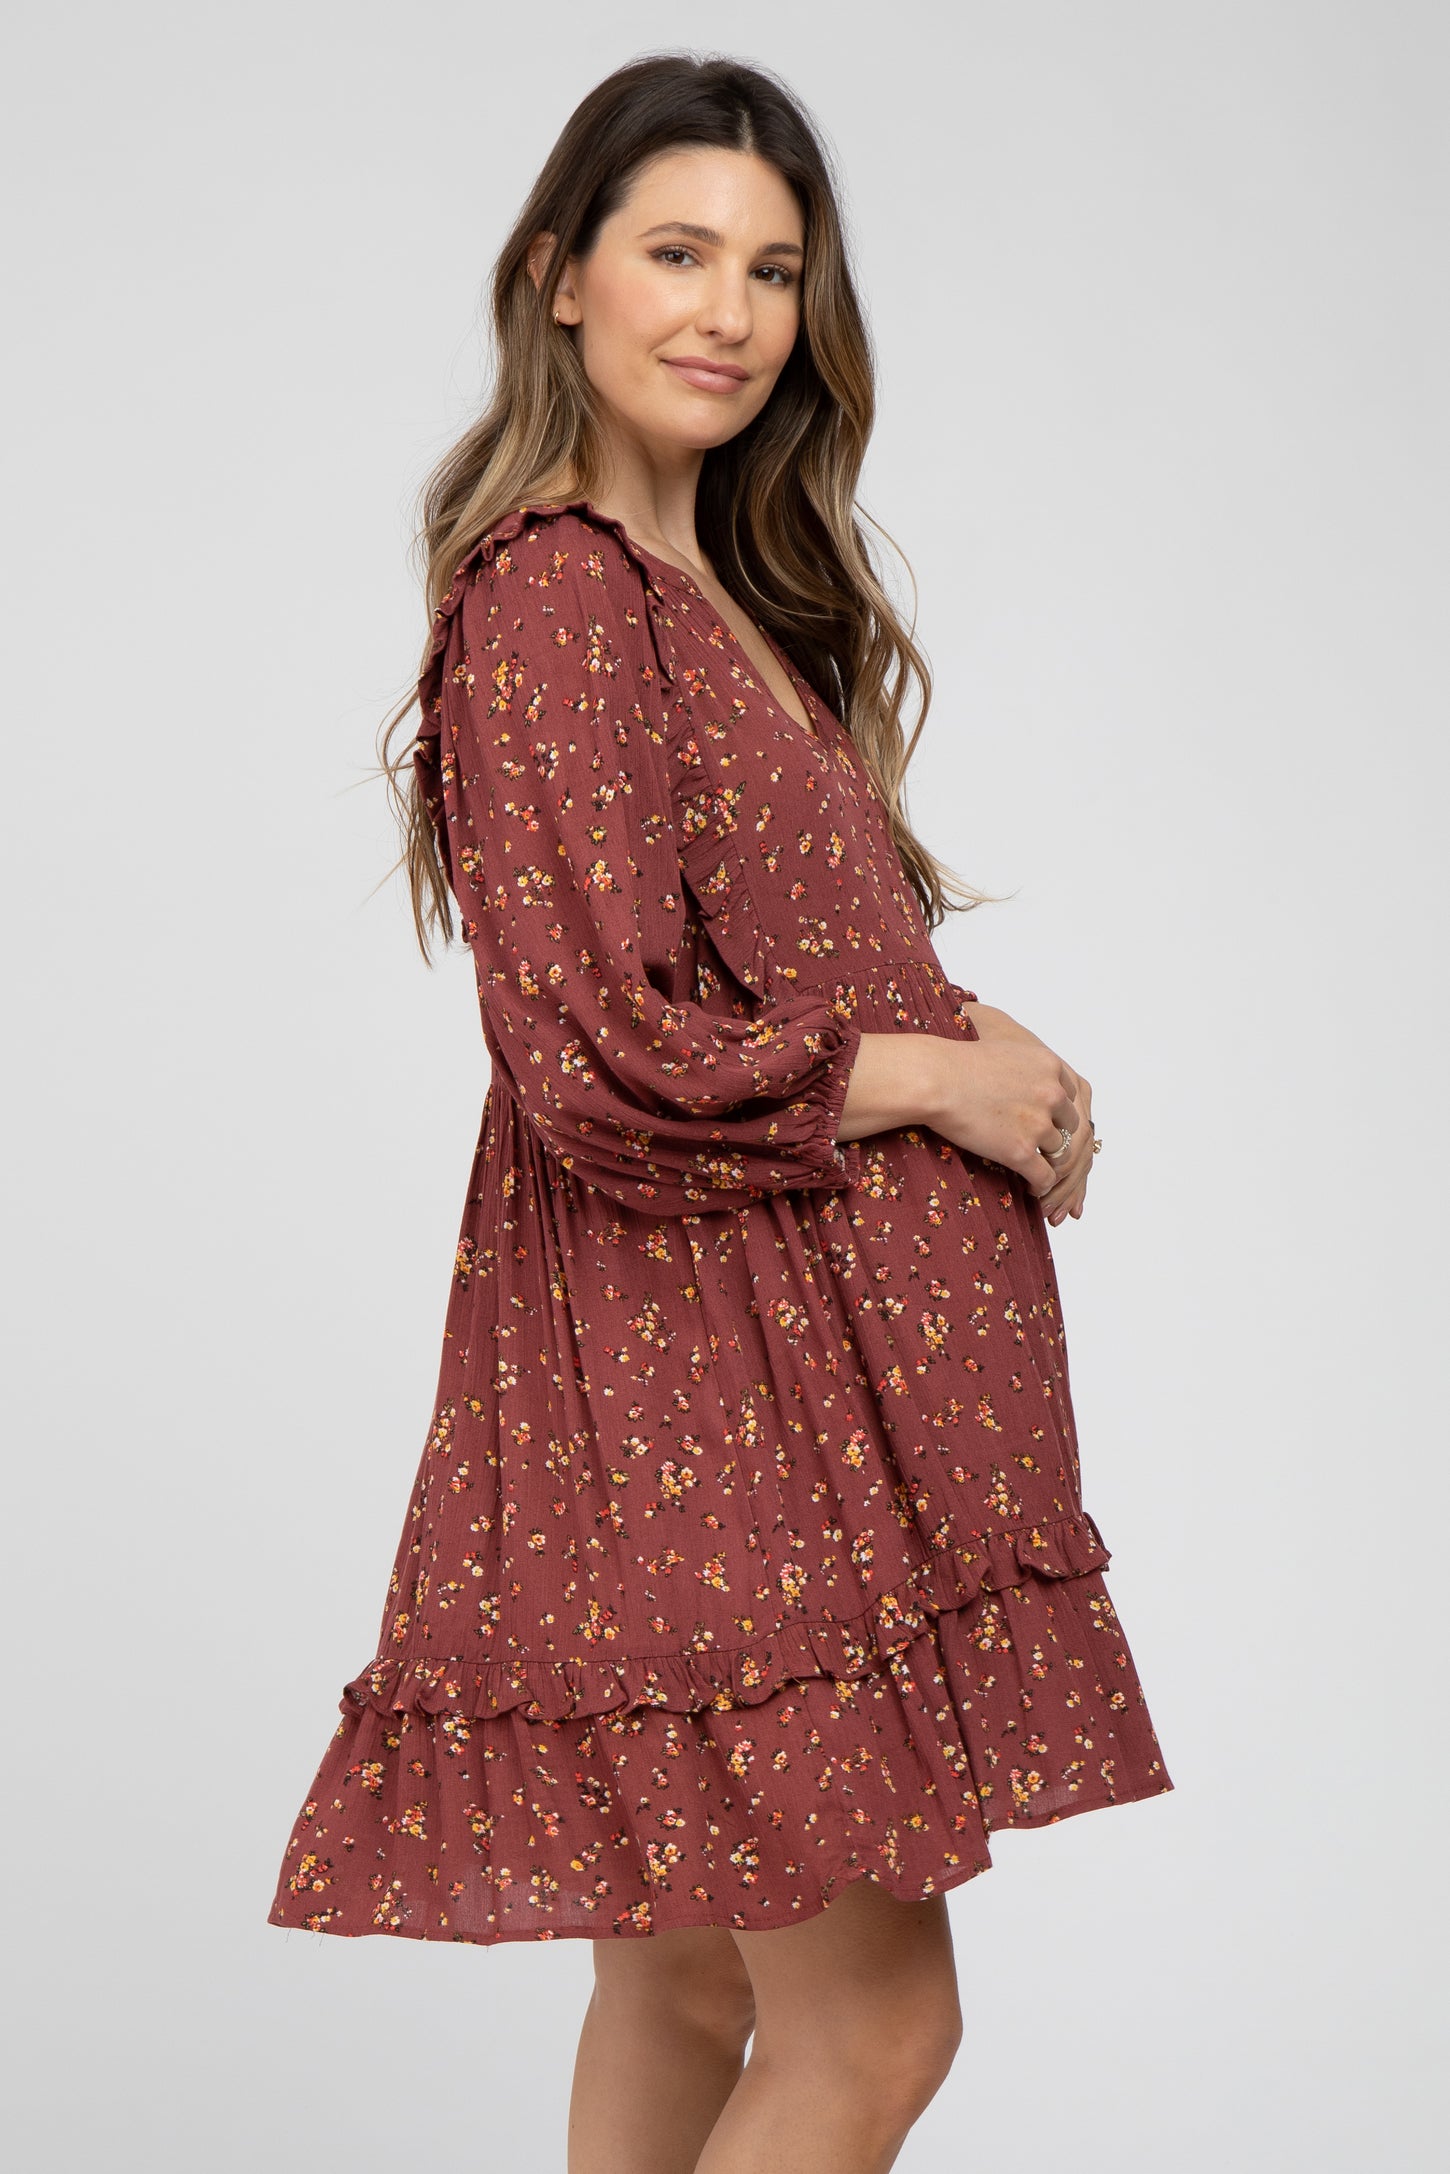 Burgundy Floral Ruffle Trim Maternity Dress– PinkBlush